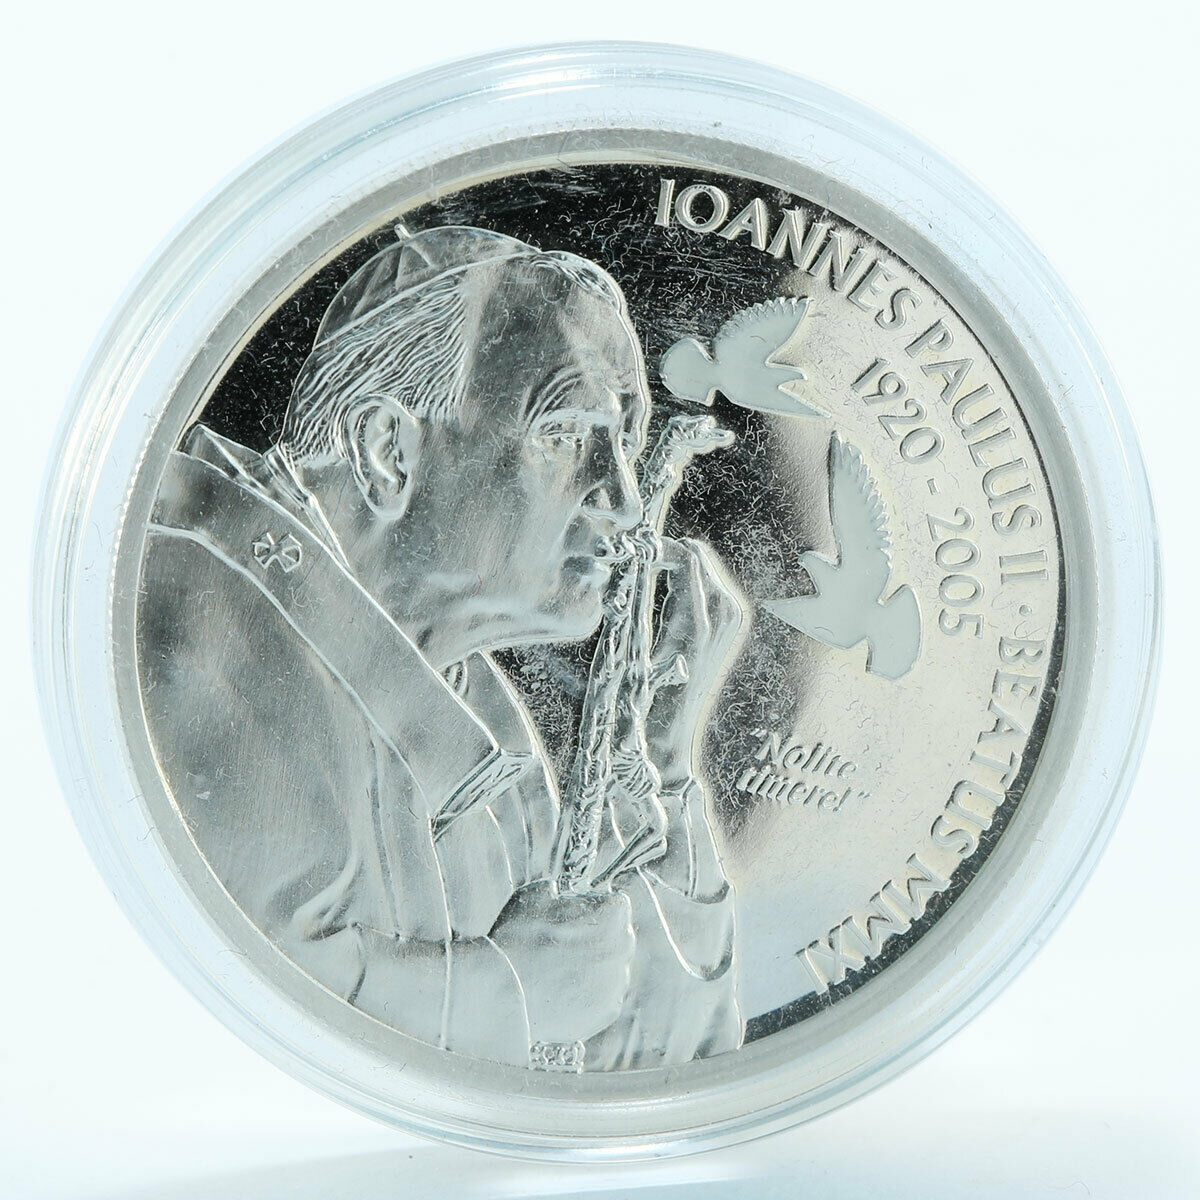 Republic of Palau 2 dollars Ioannes Paulus II Silver Coin 2011